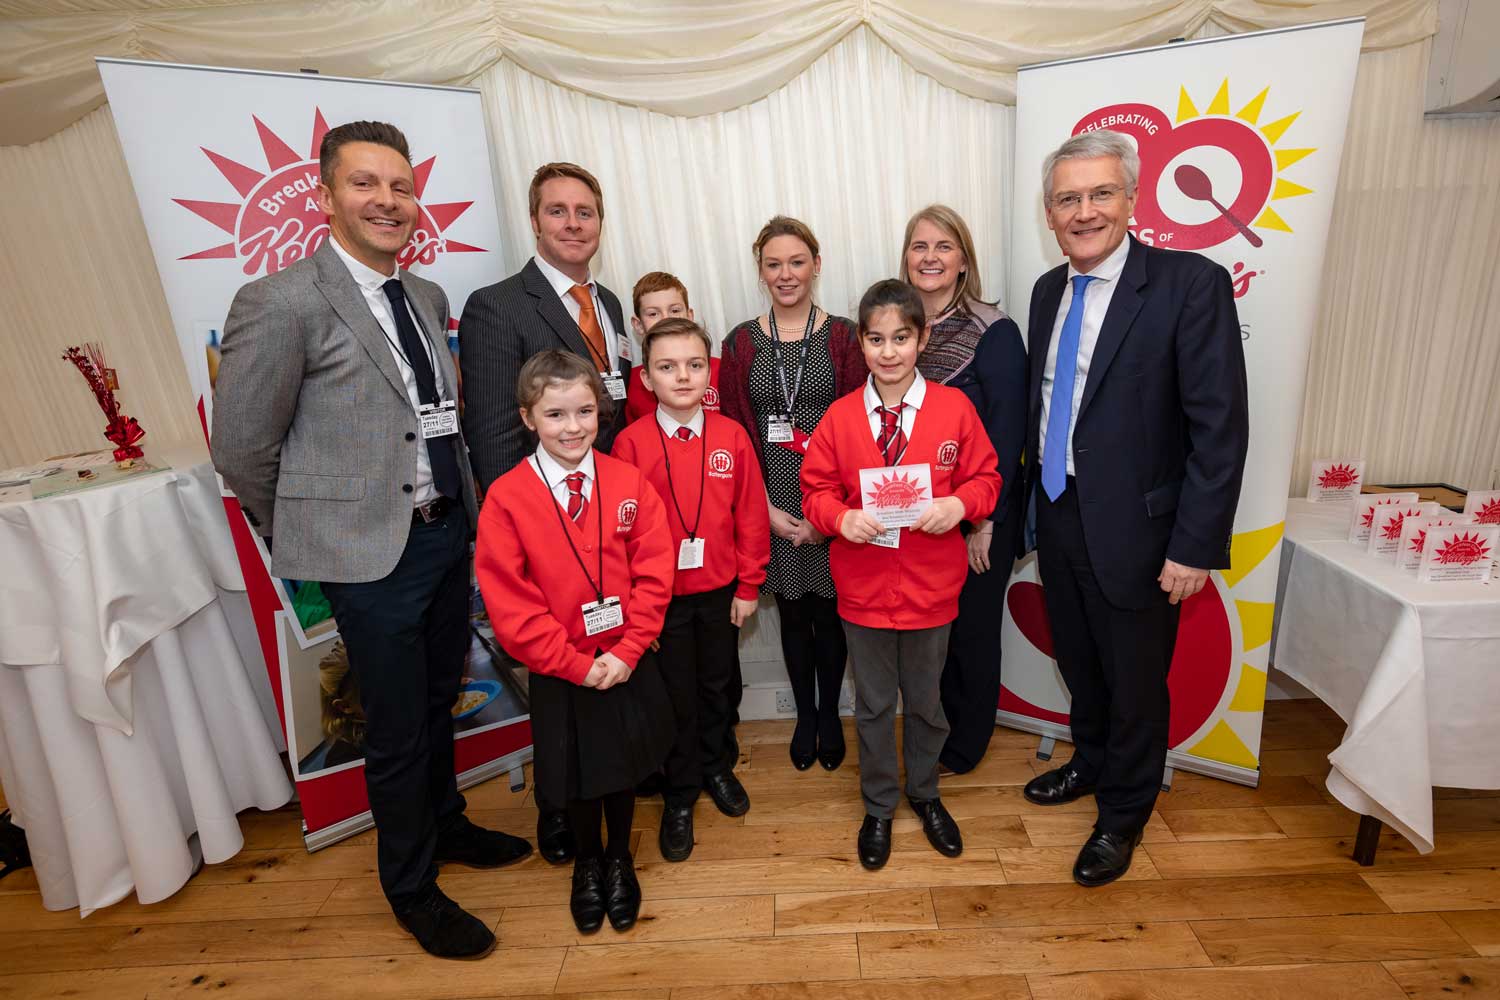 Saltergate Junior School breakfast club scooped the regional crown and cash prize of £1,000 in Harrogate